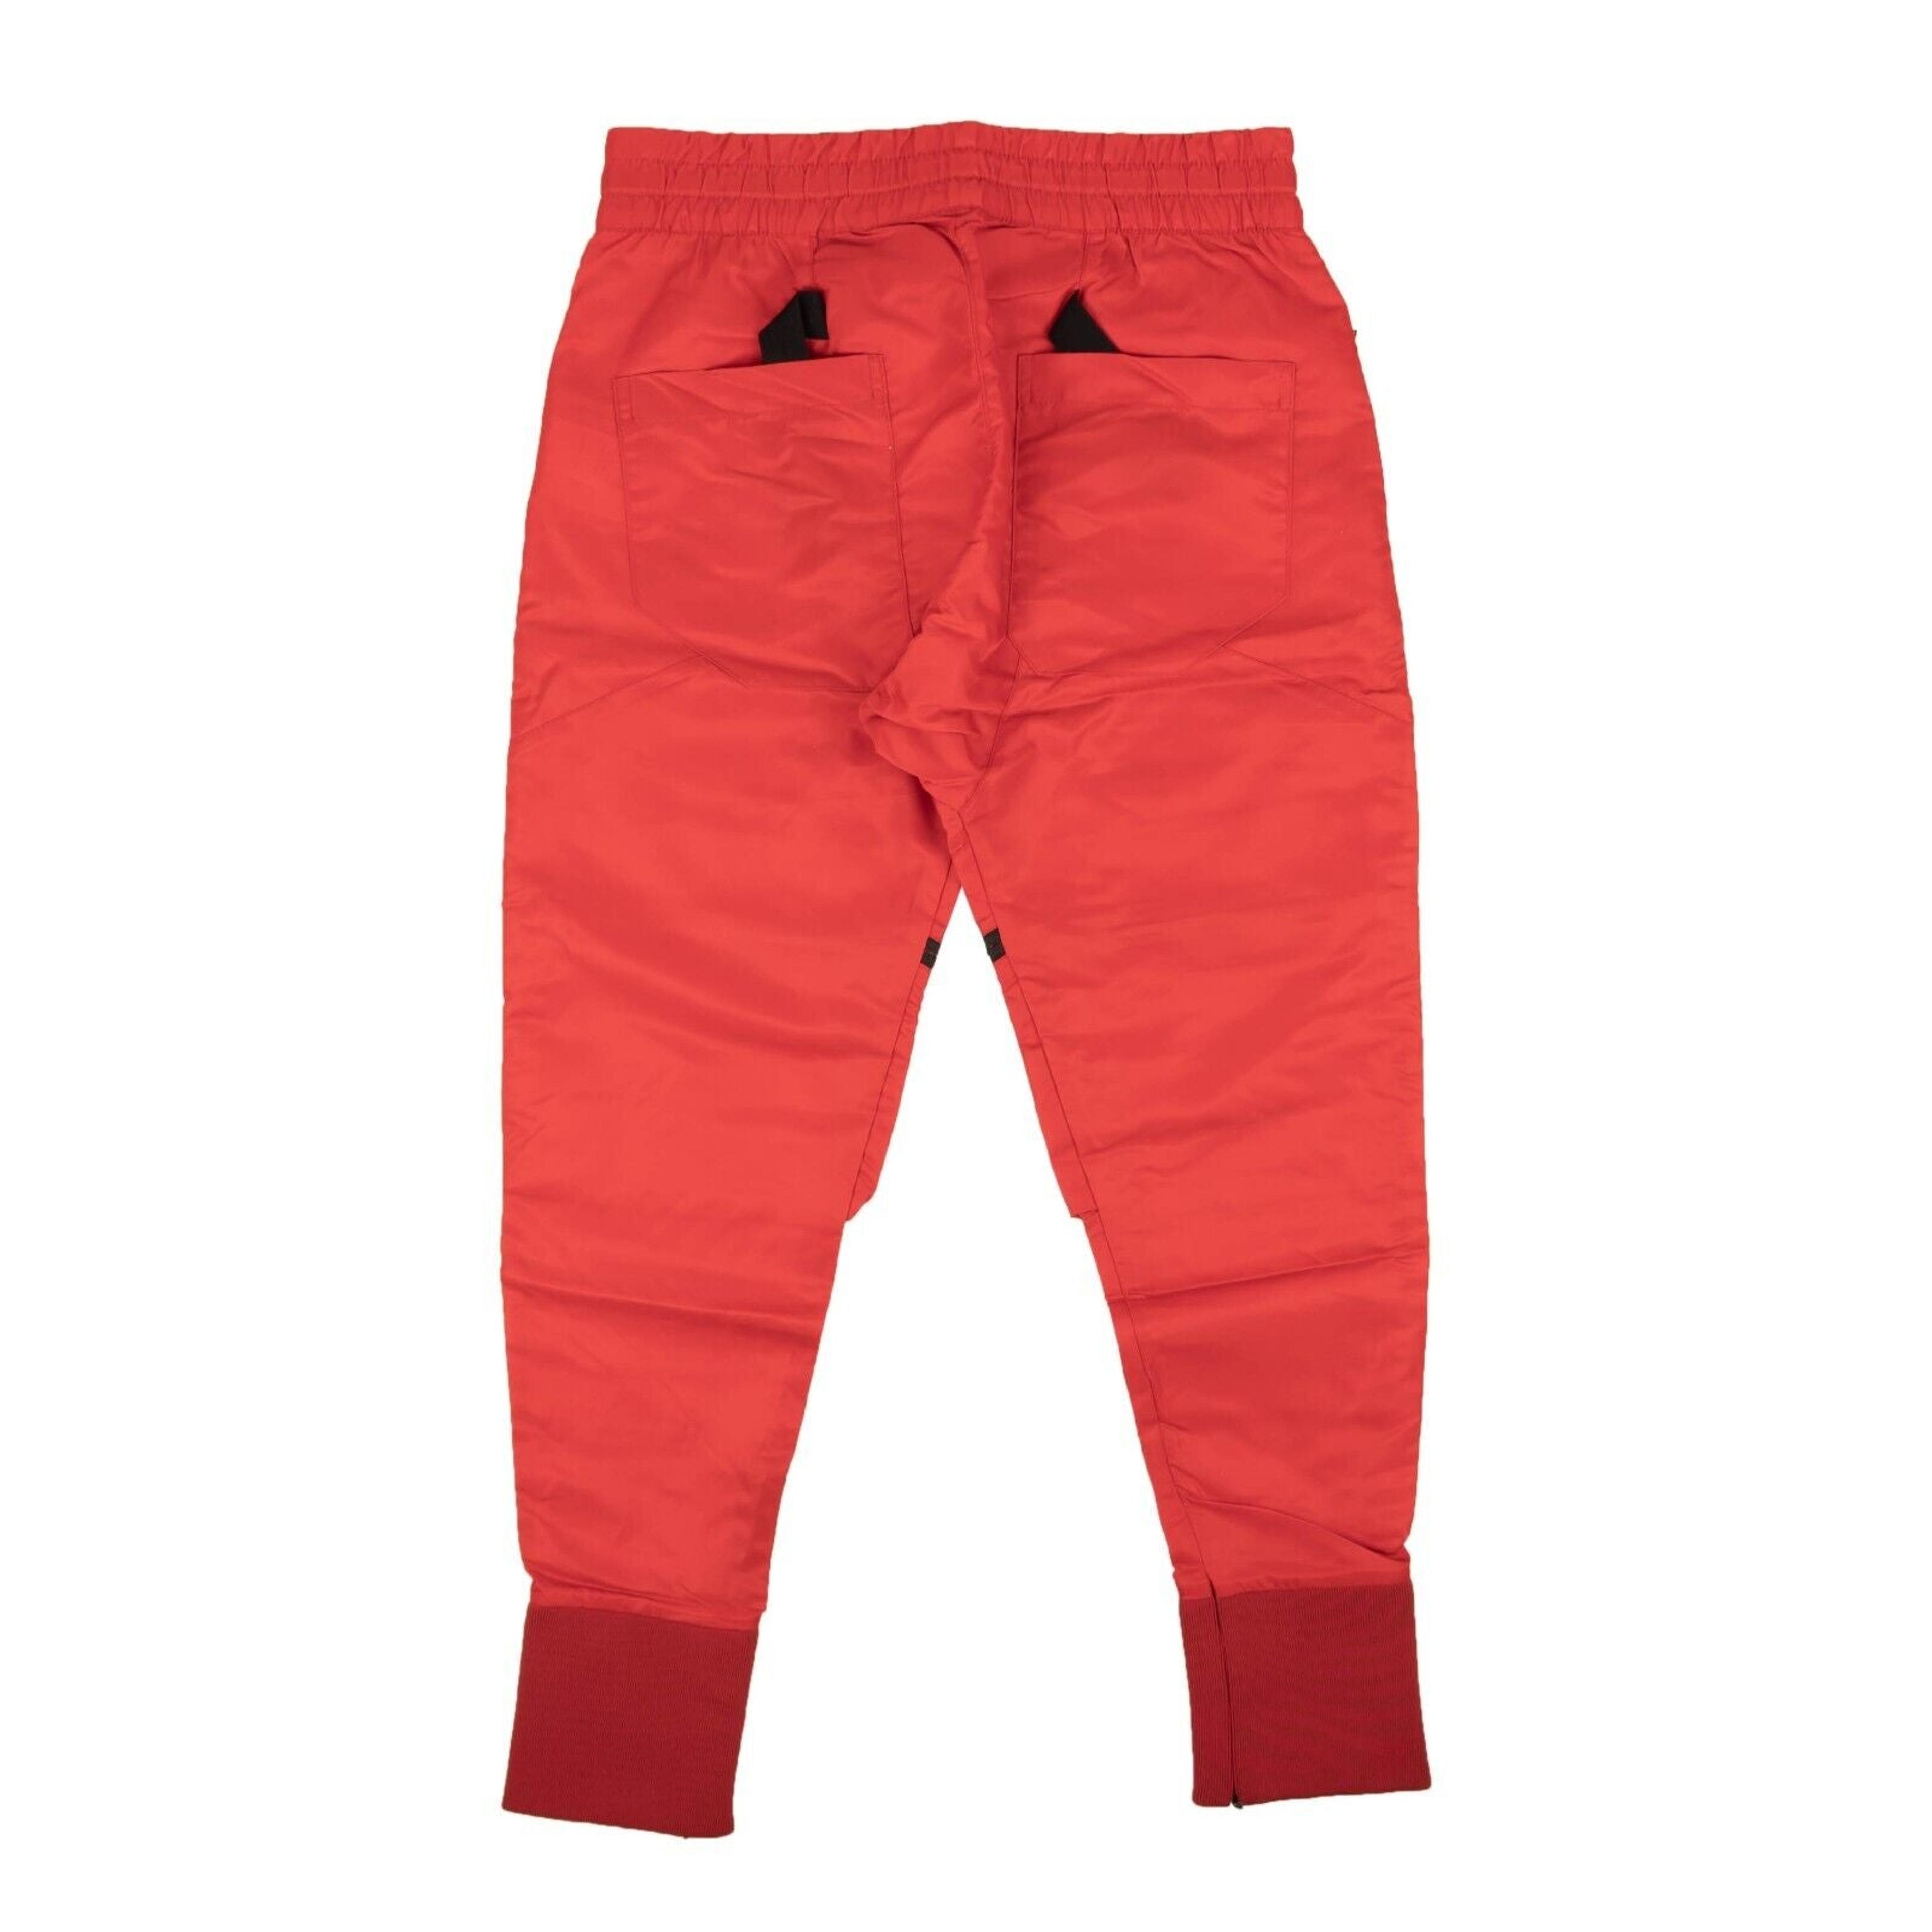 Alternate View 2 of Red Satin Zipper Pants